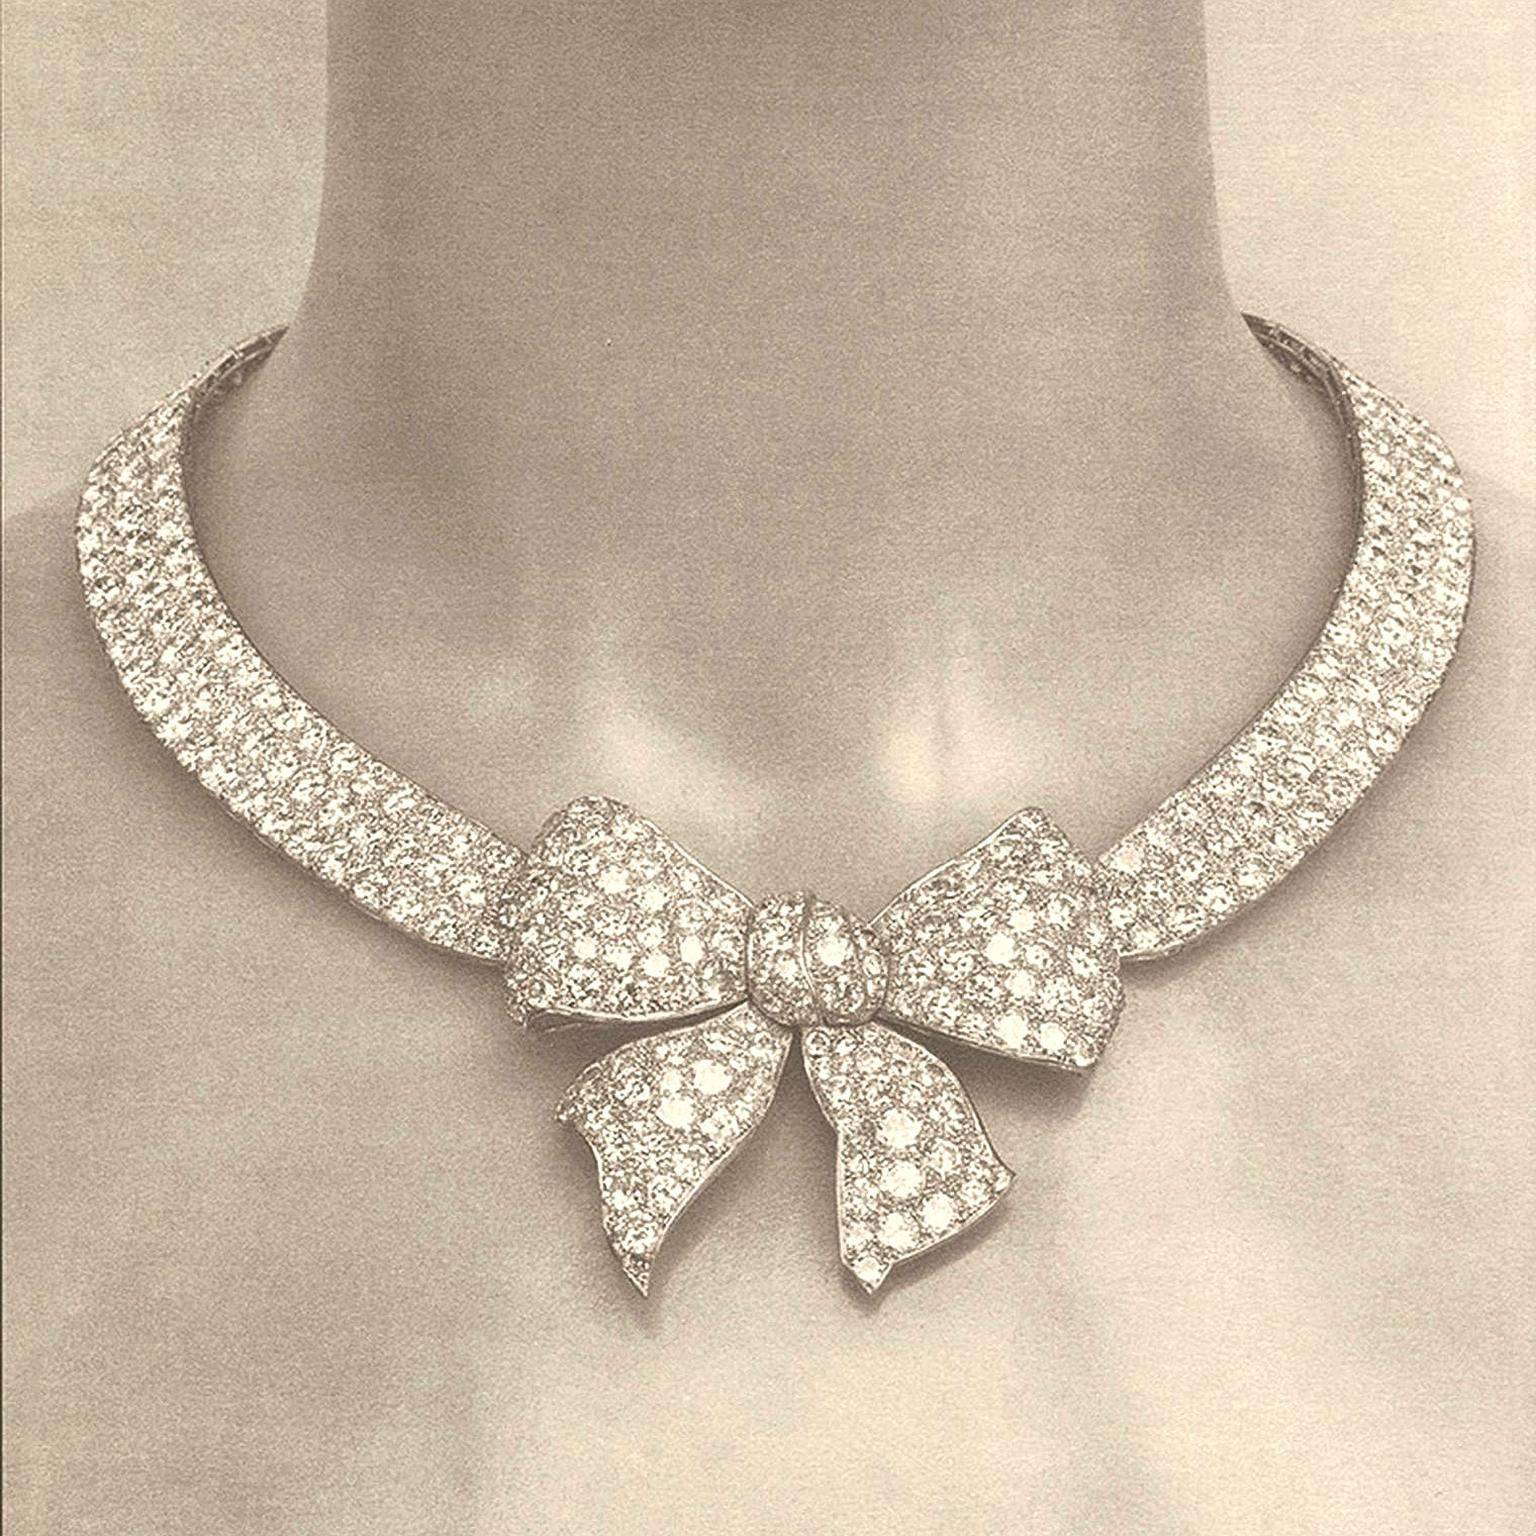 Chanel Noeud necklace